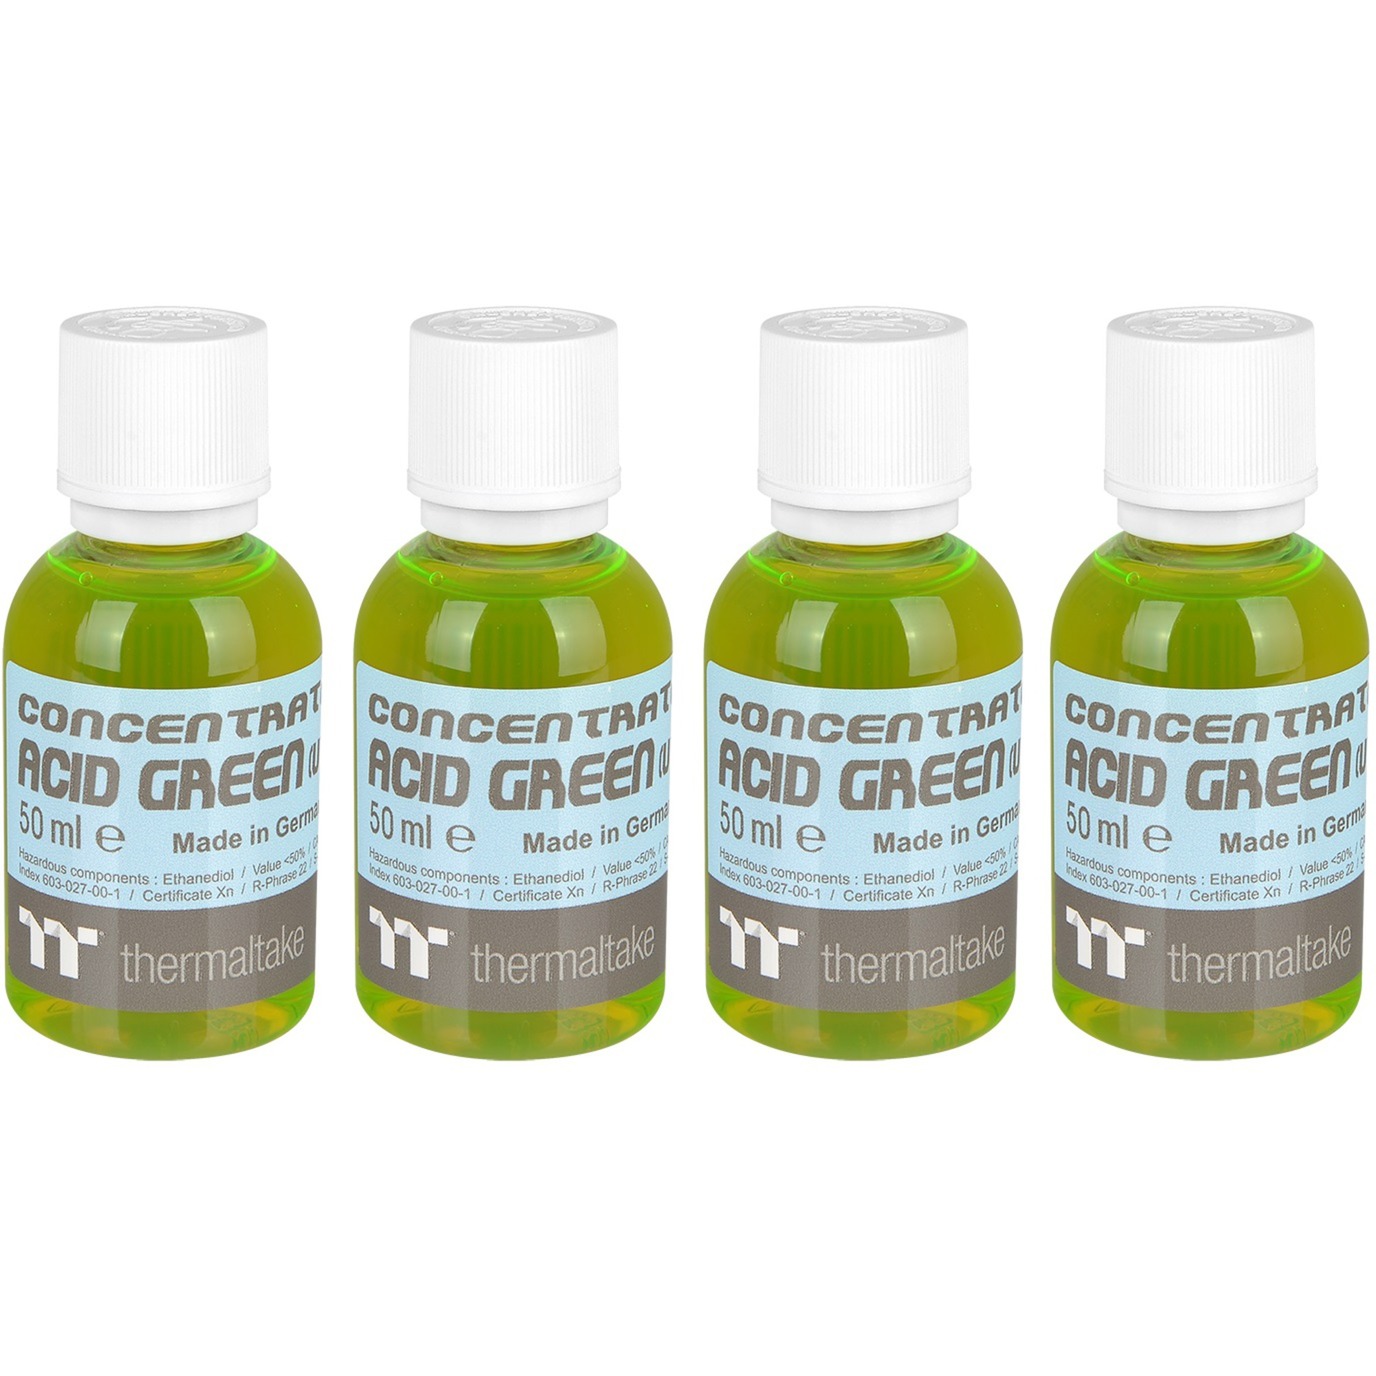 Premium Concentrate - Acid Green (4 Bottle Pack), Kühlmittel von Thermaltake